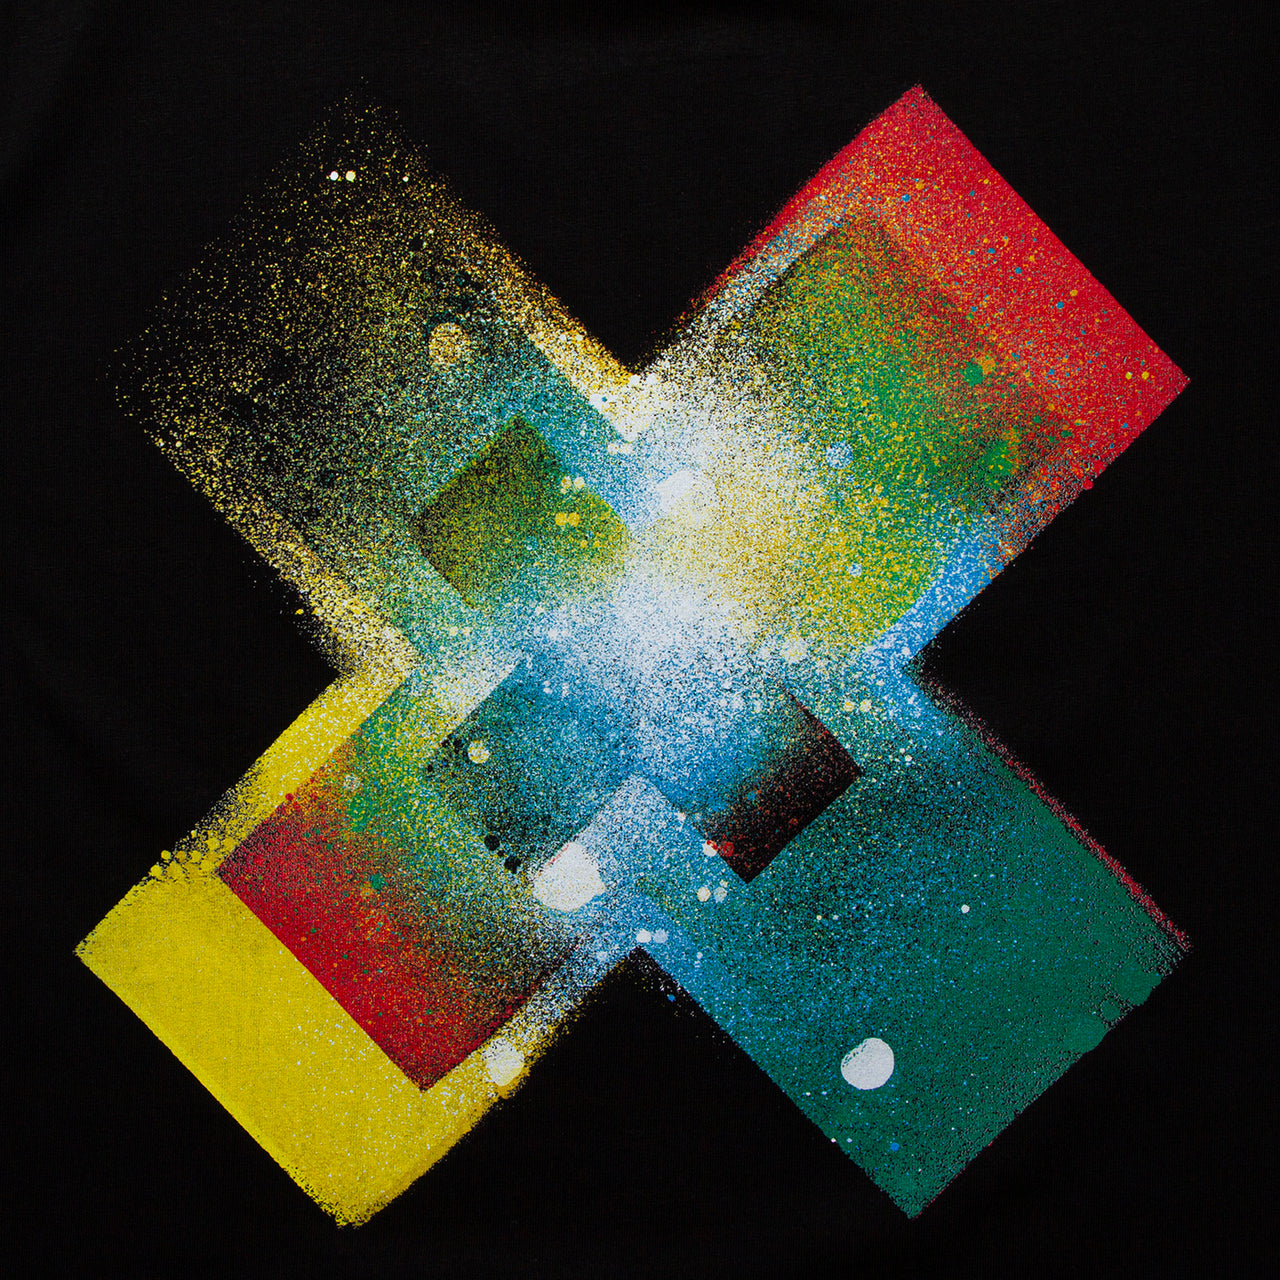 Inner X Imprint - Tshirt - Black